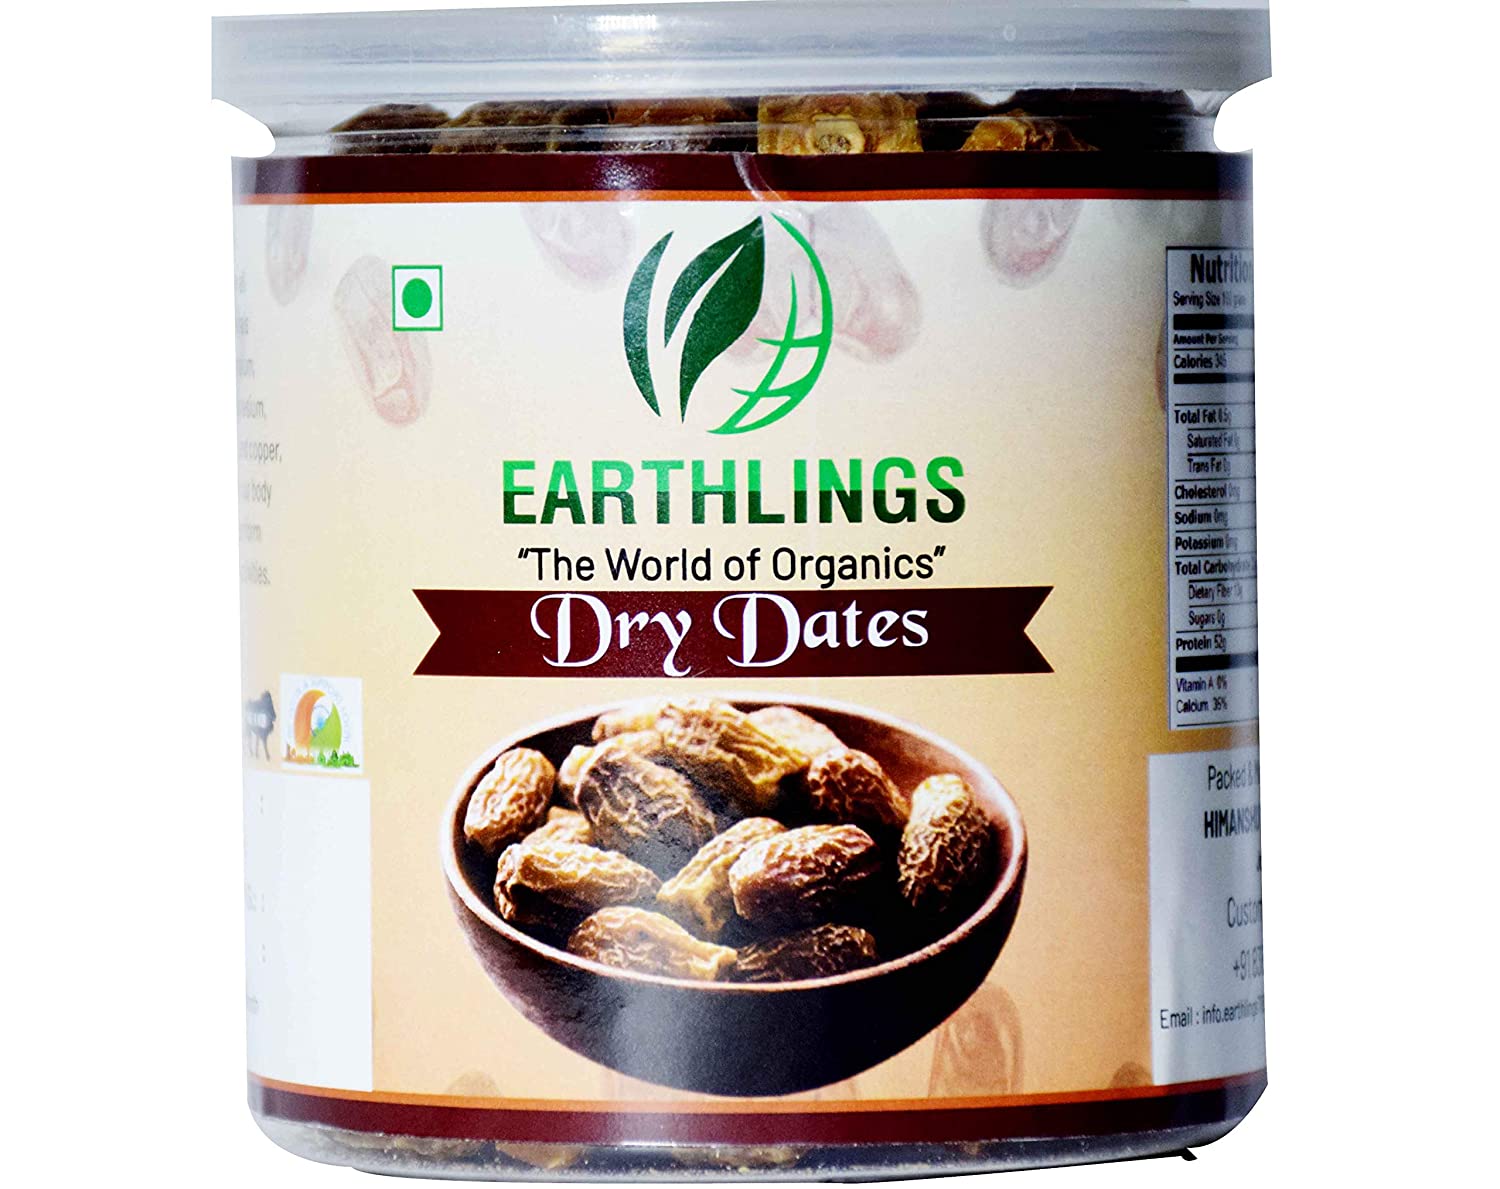 EARTHLINGS Dry Dates Image